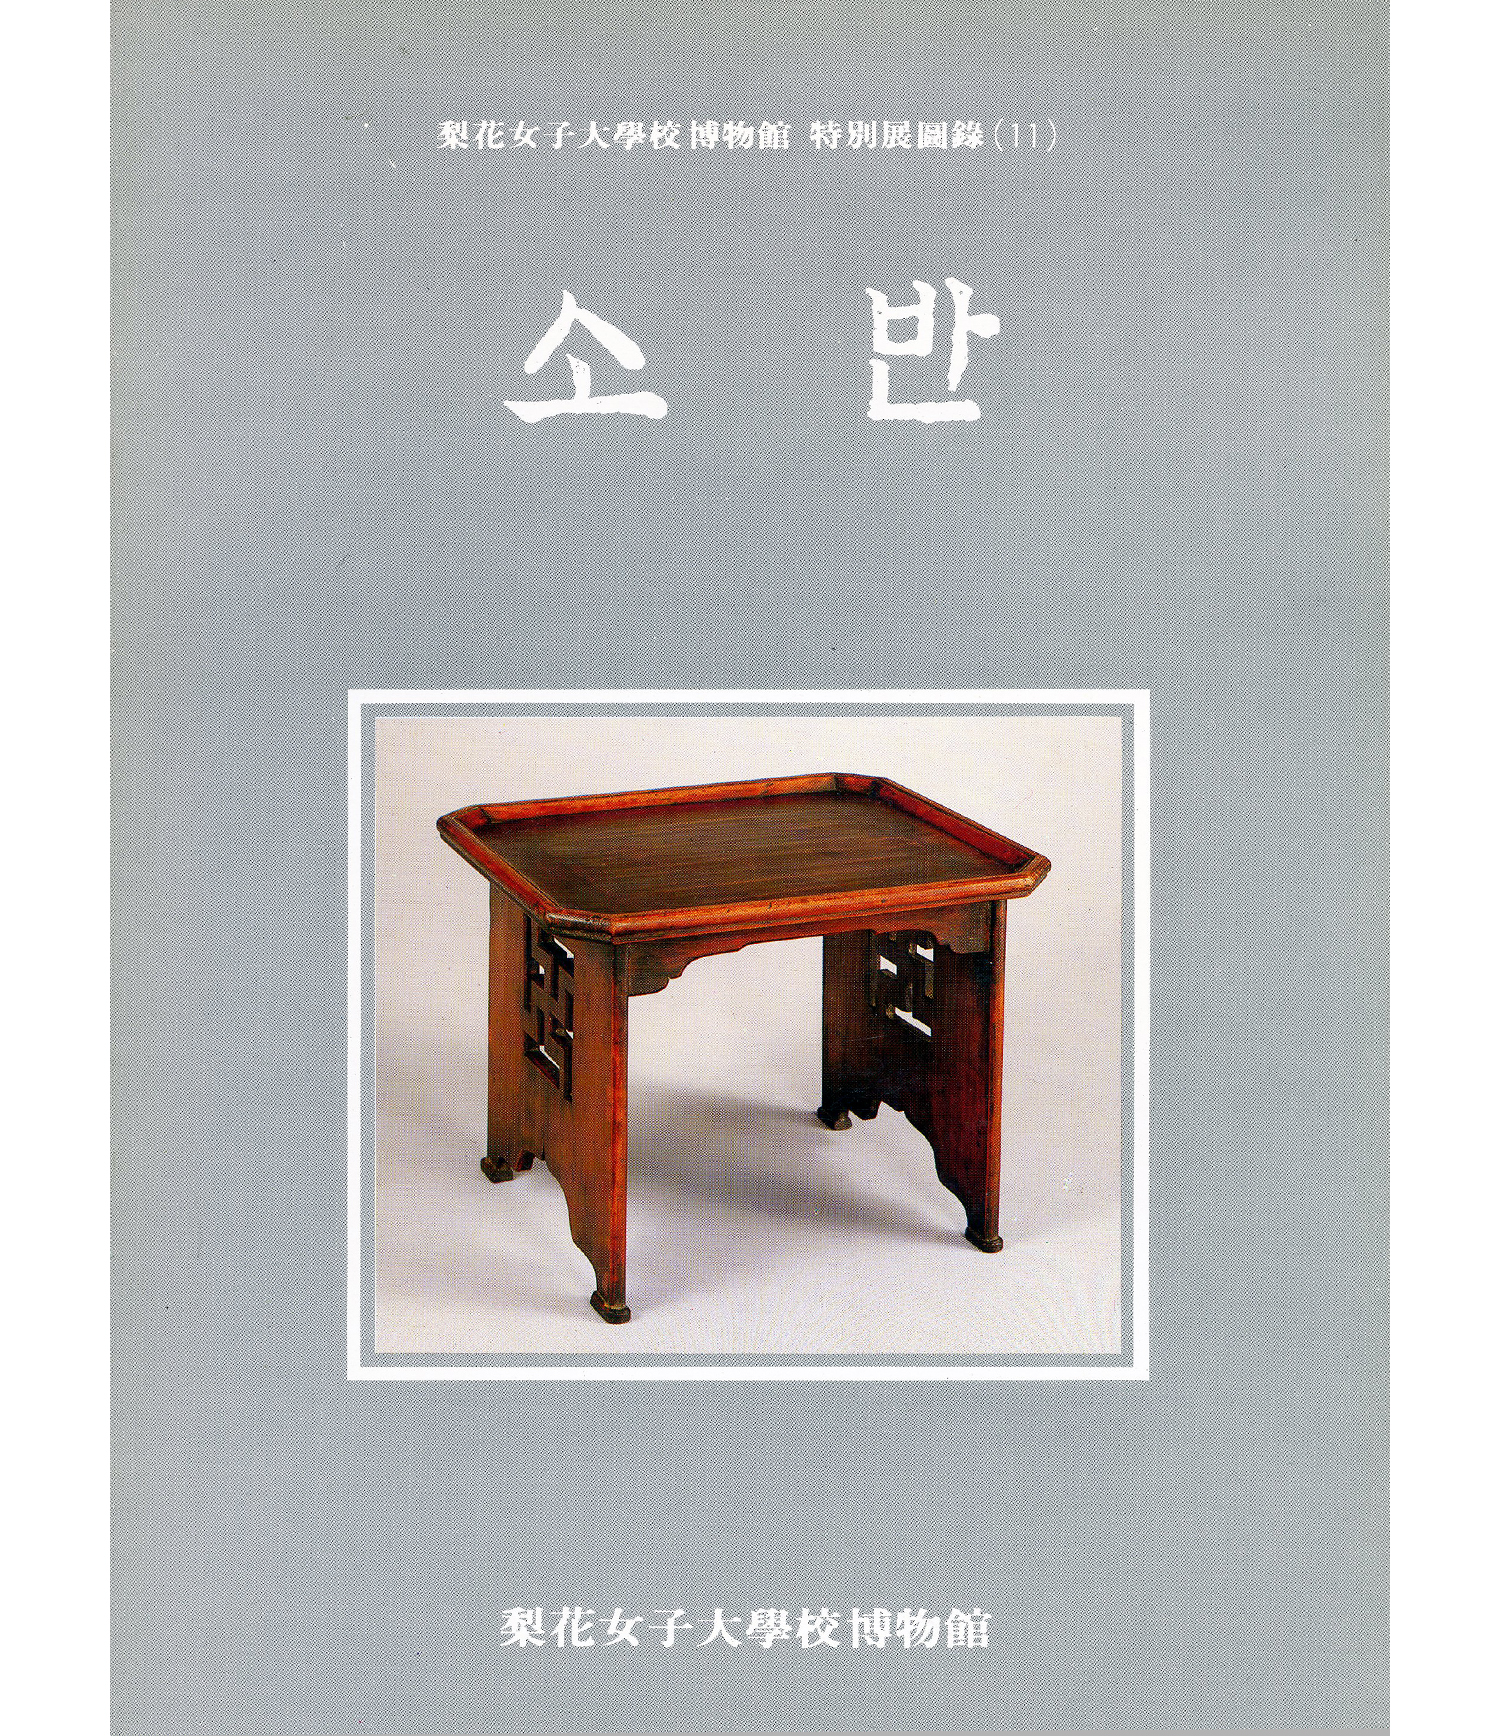 So-ban (Table) in Joseon Dynasty